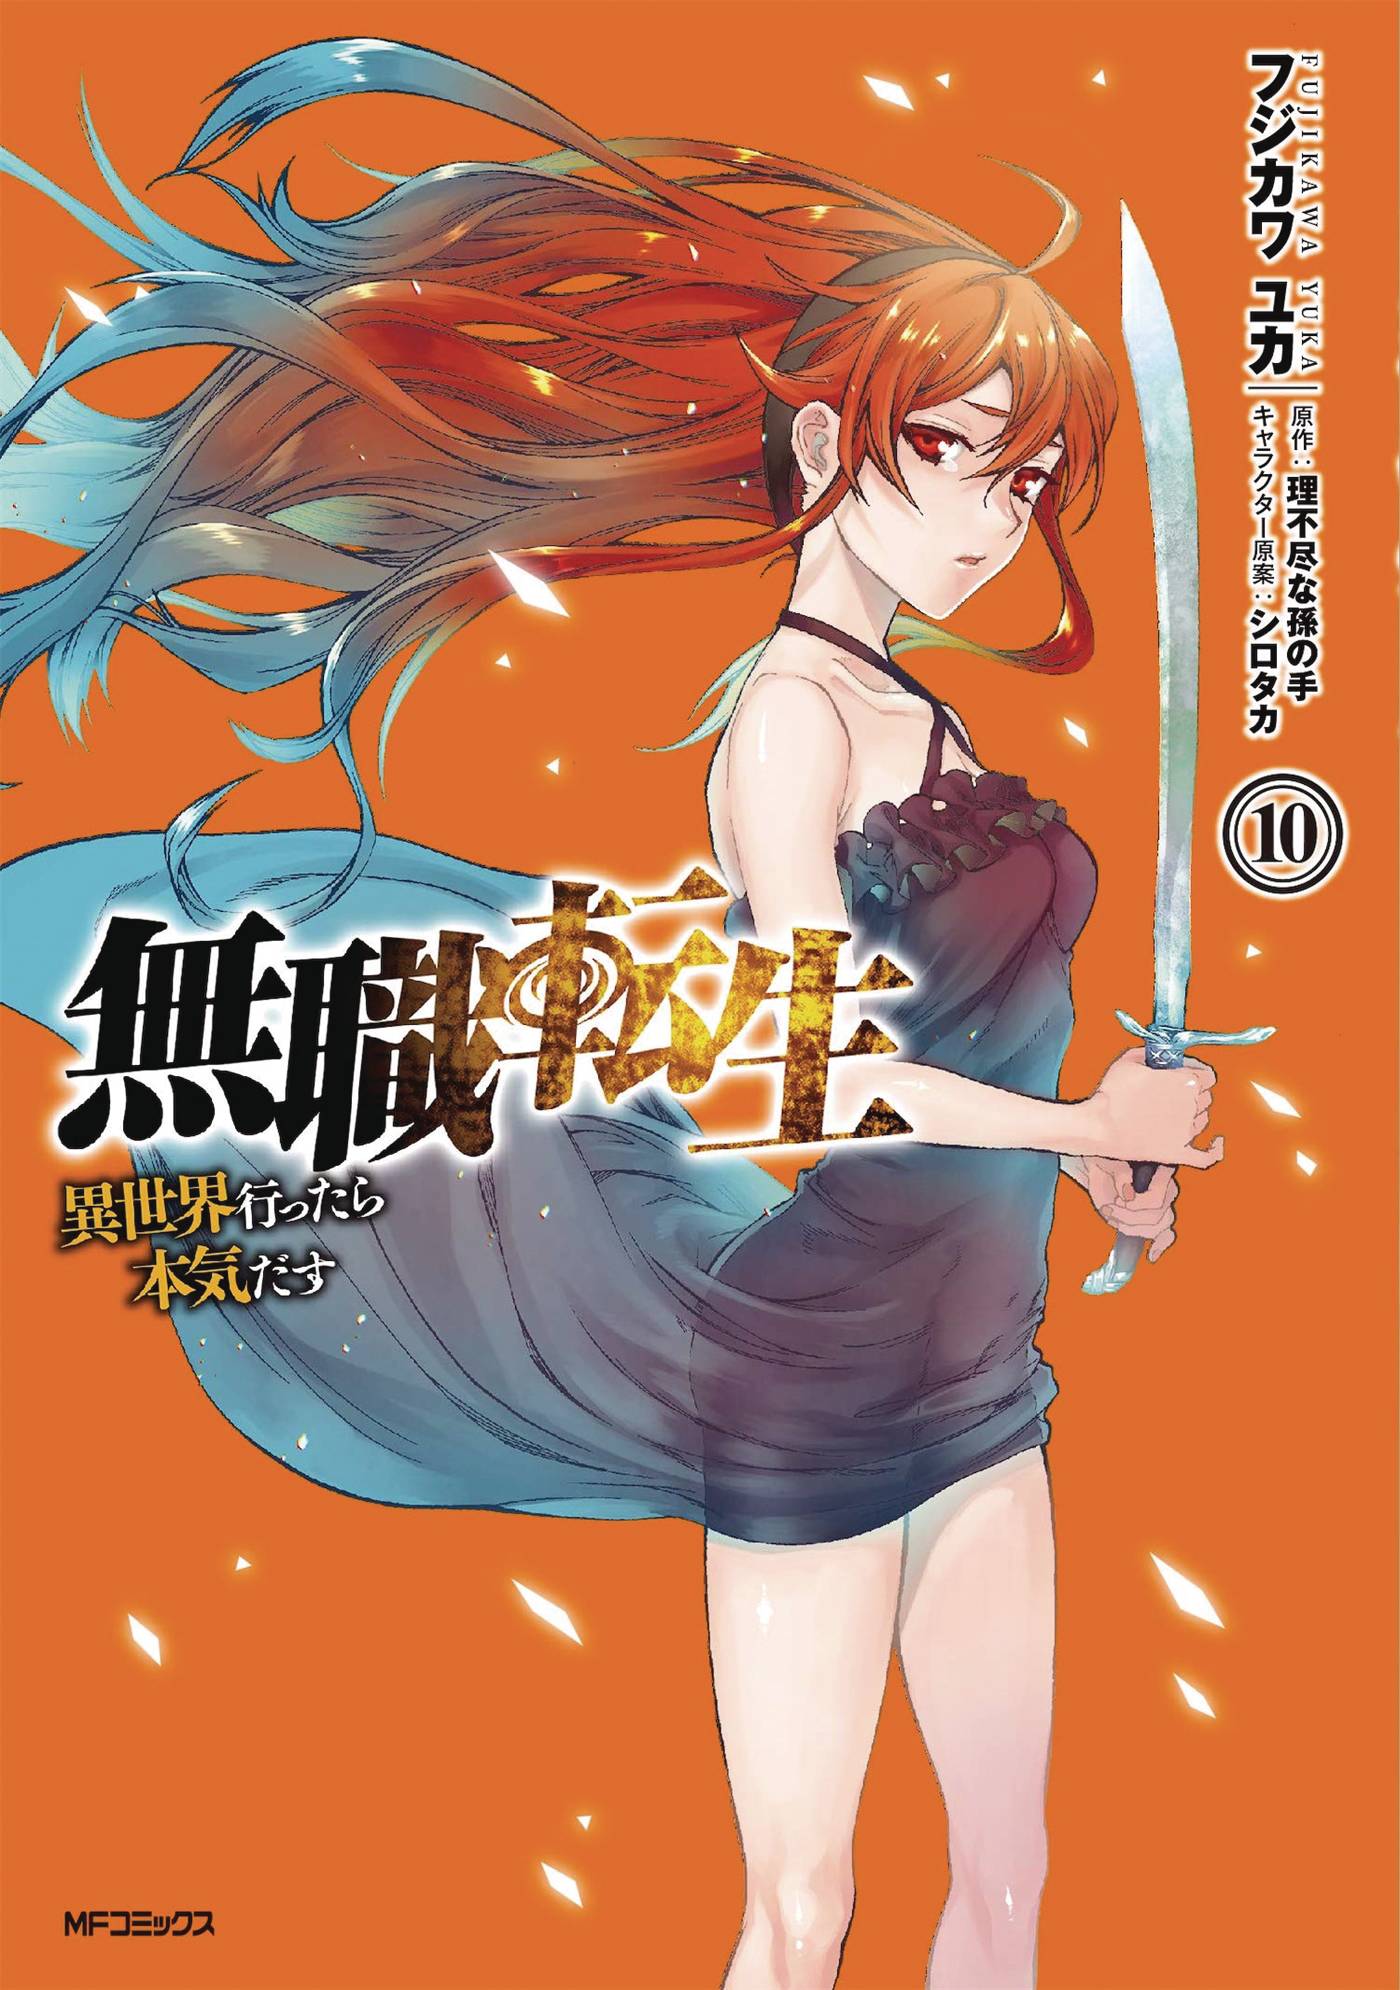 Mushoku Tensei Jobless Reincarnation Manga Volume 10